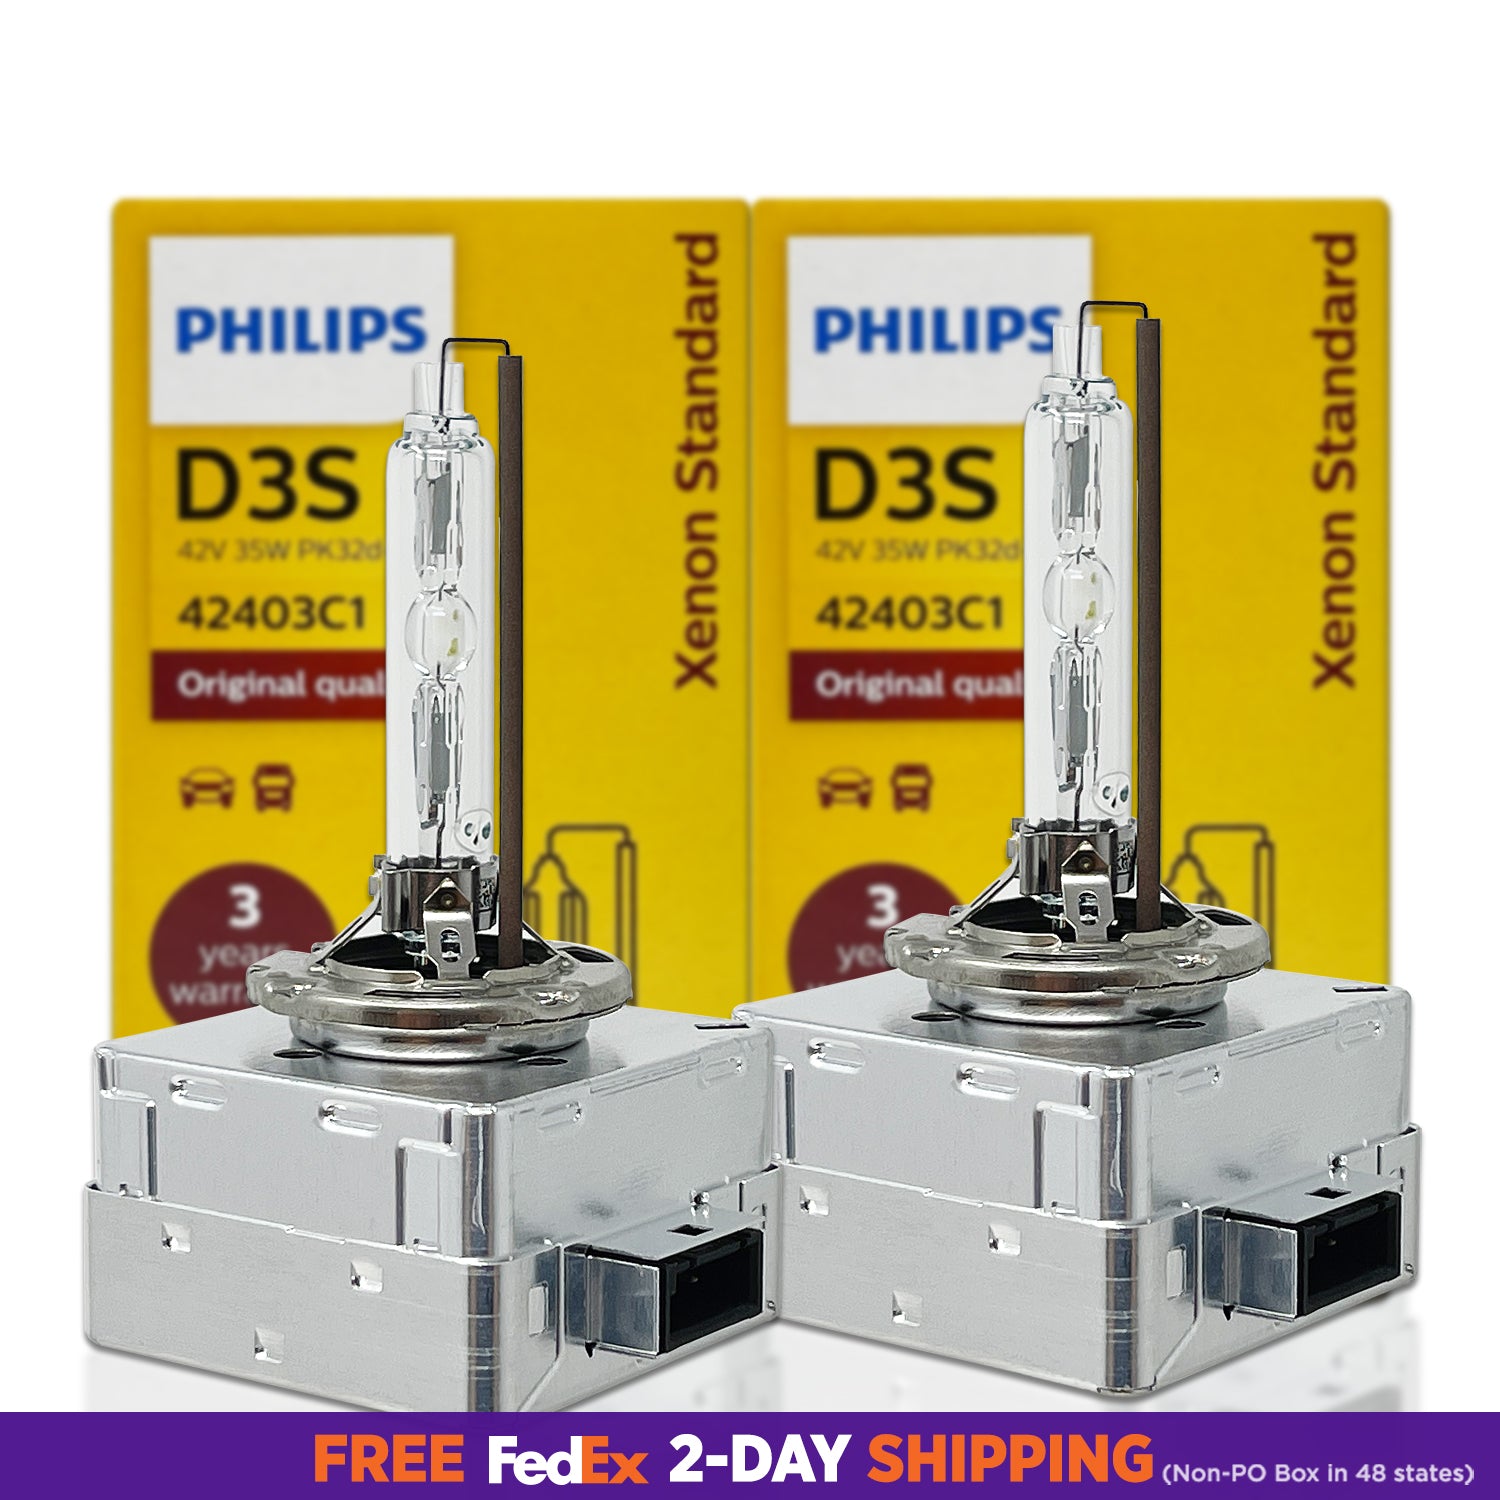 Philips D3S Xenon HID Headlight Replacement Bulbs 35W, XenStart D3S Bulbs